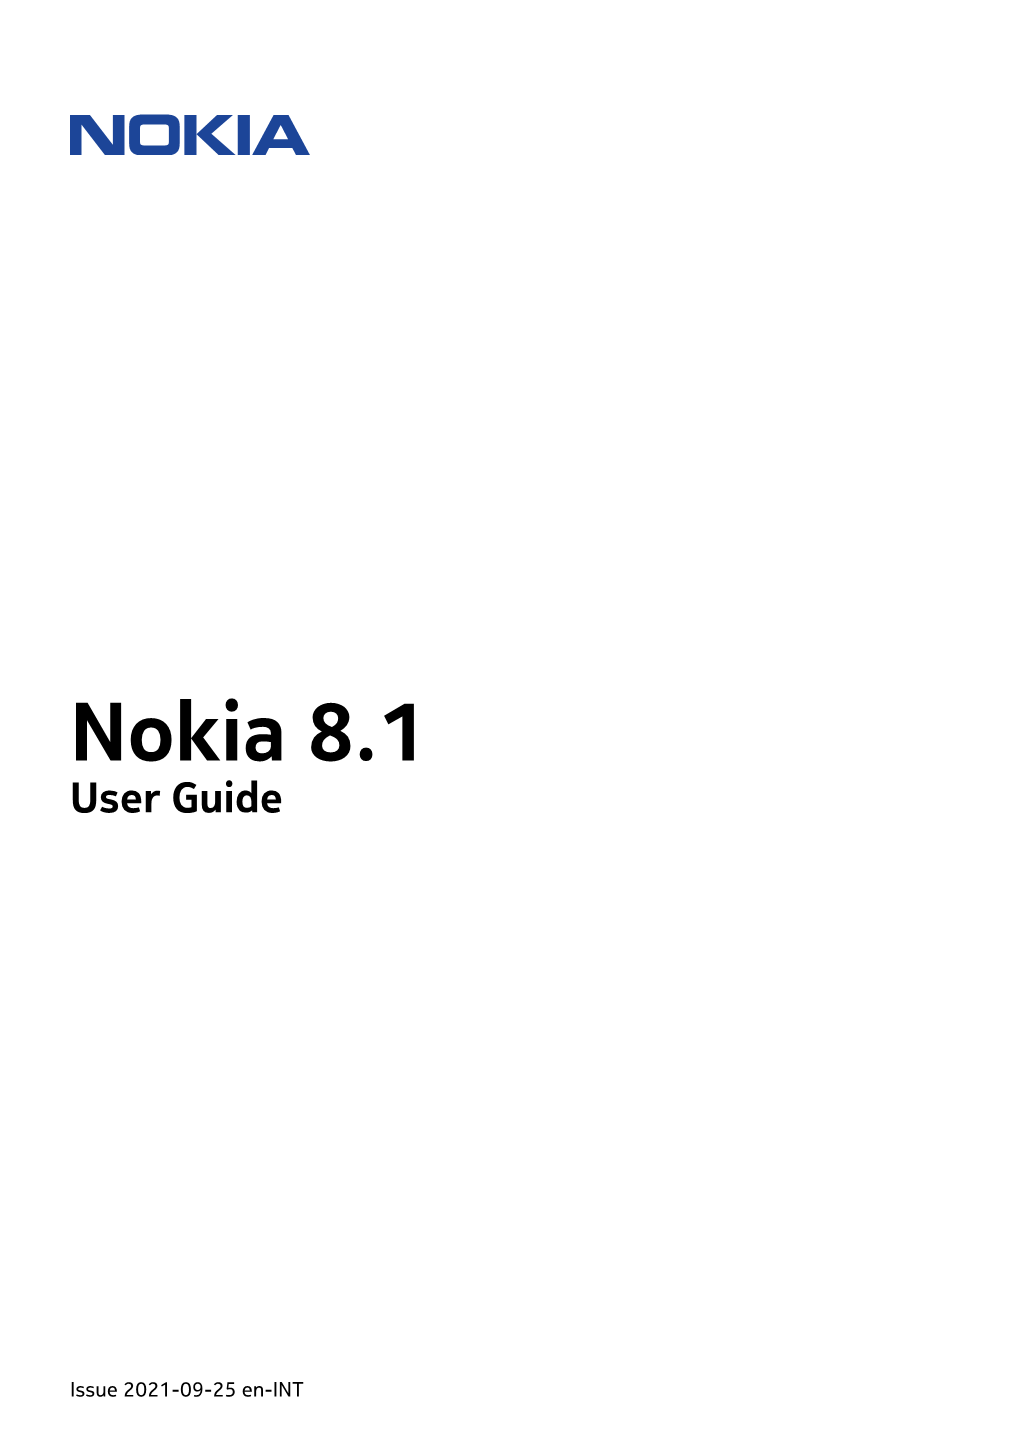 Nokia 8.1 User Guide